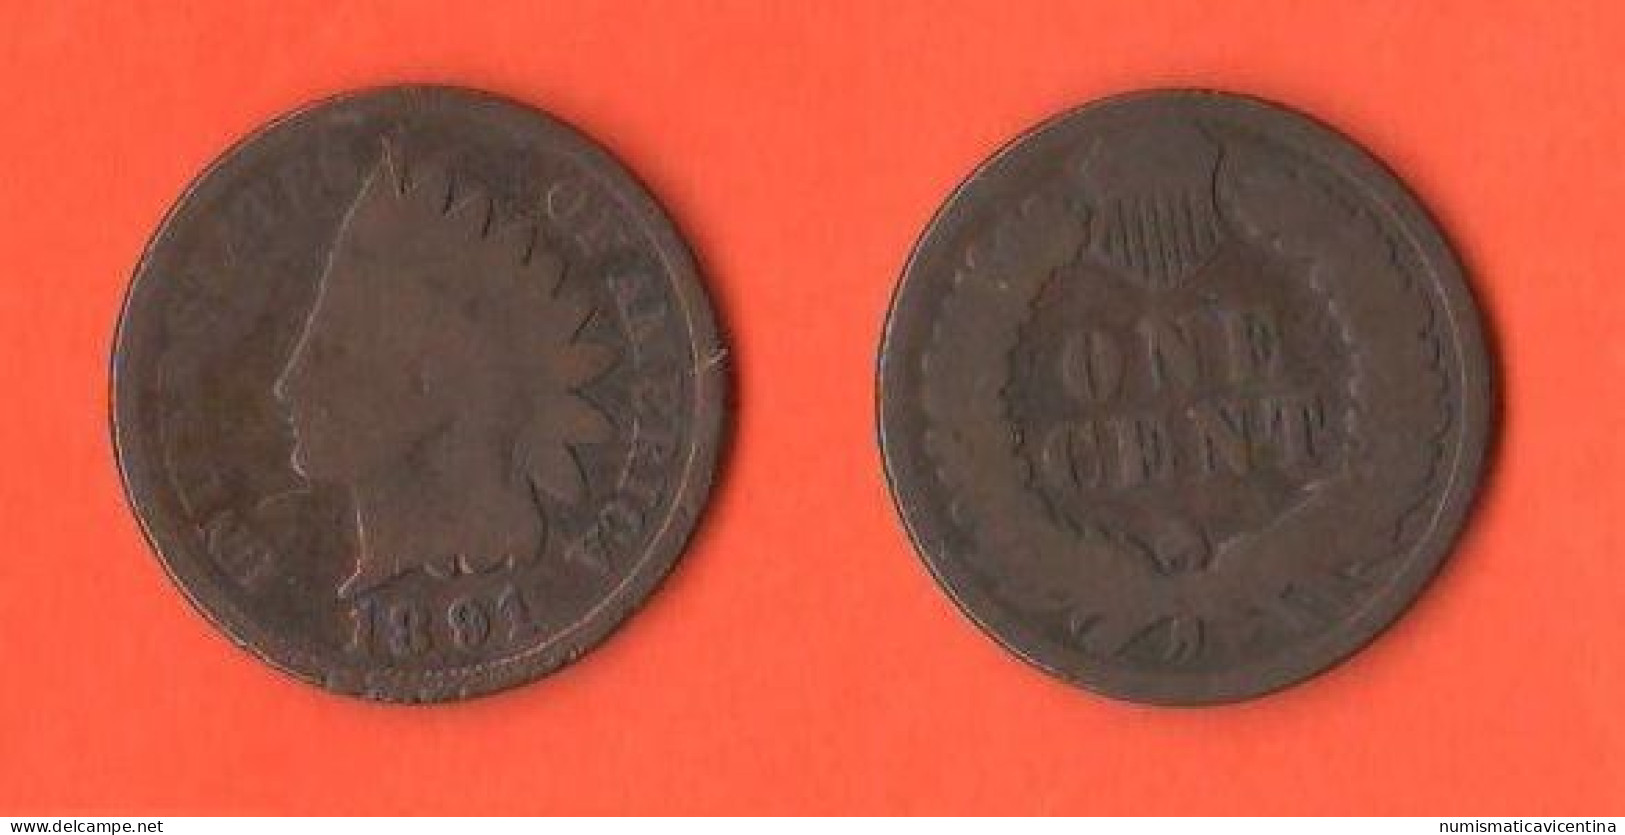 America  1 Cent 1891 USA One Cent America Bronze Coin   XXX - Herdenking